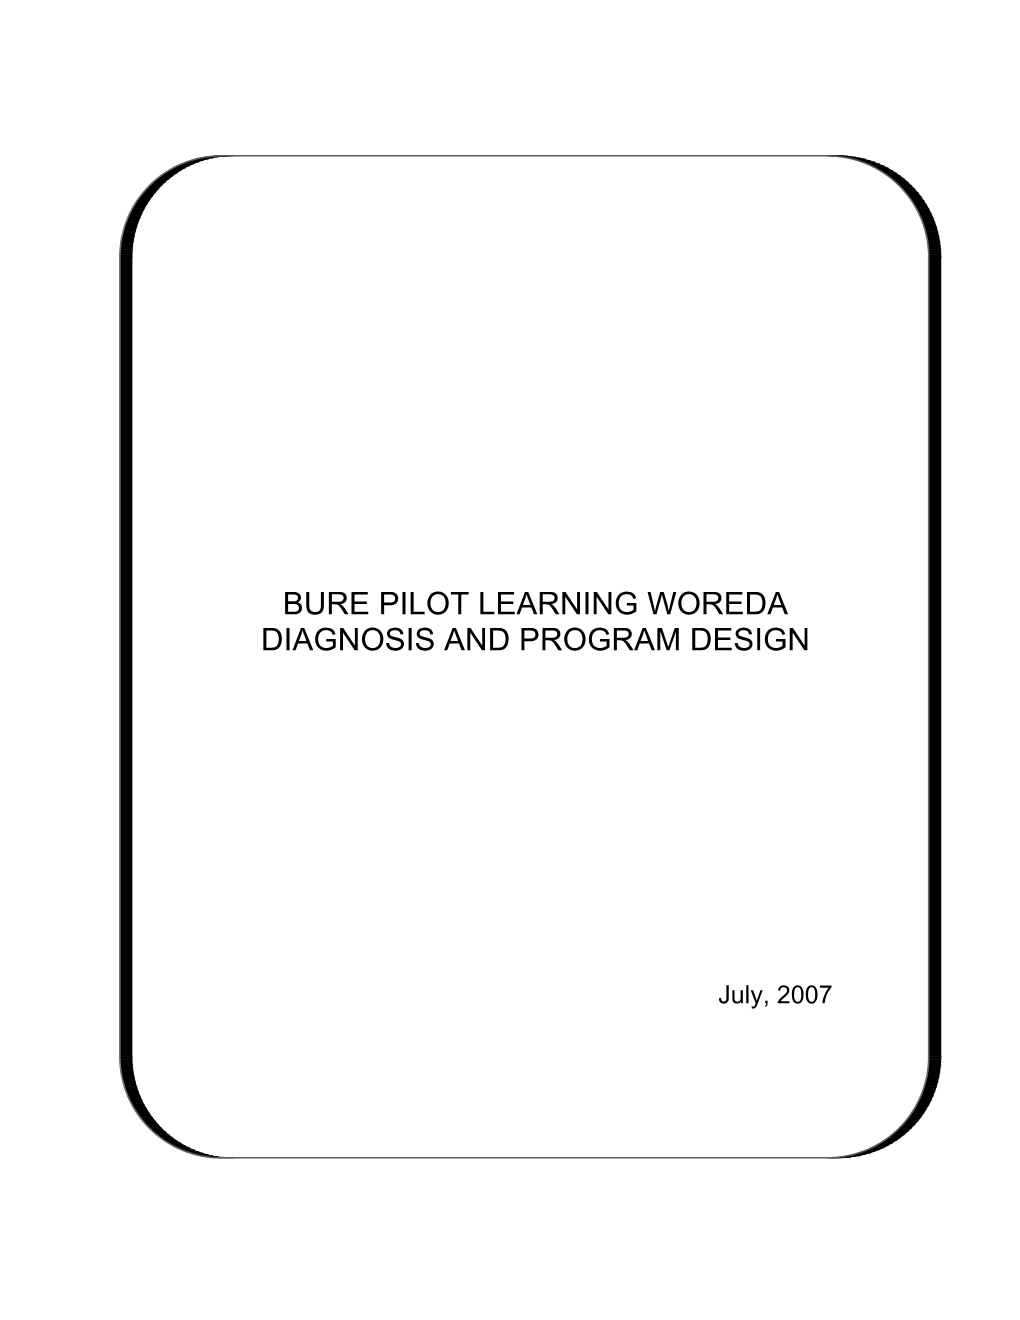 Bure Pilot Learning Woreda Diagnosis and Program Design